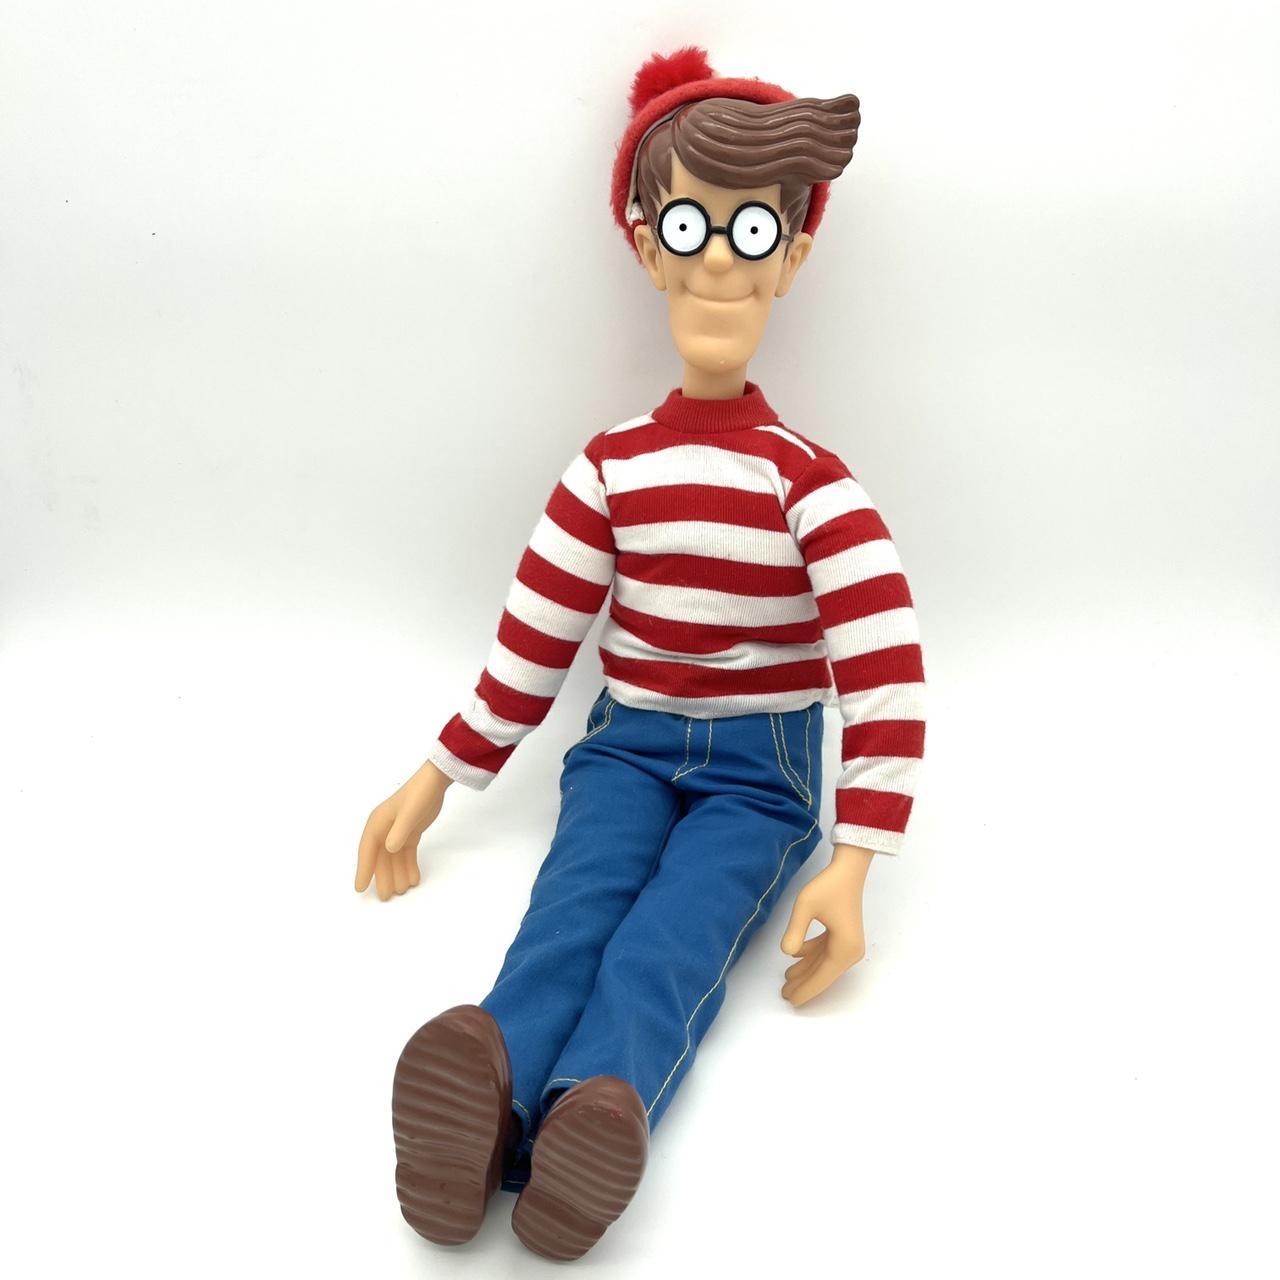 Product Image 1 - Where’s Waldo Doll

•Vintage Where’s Waldo